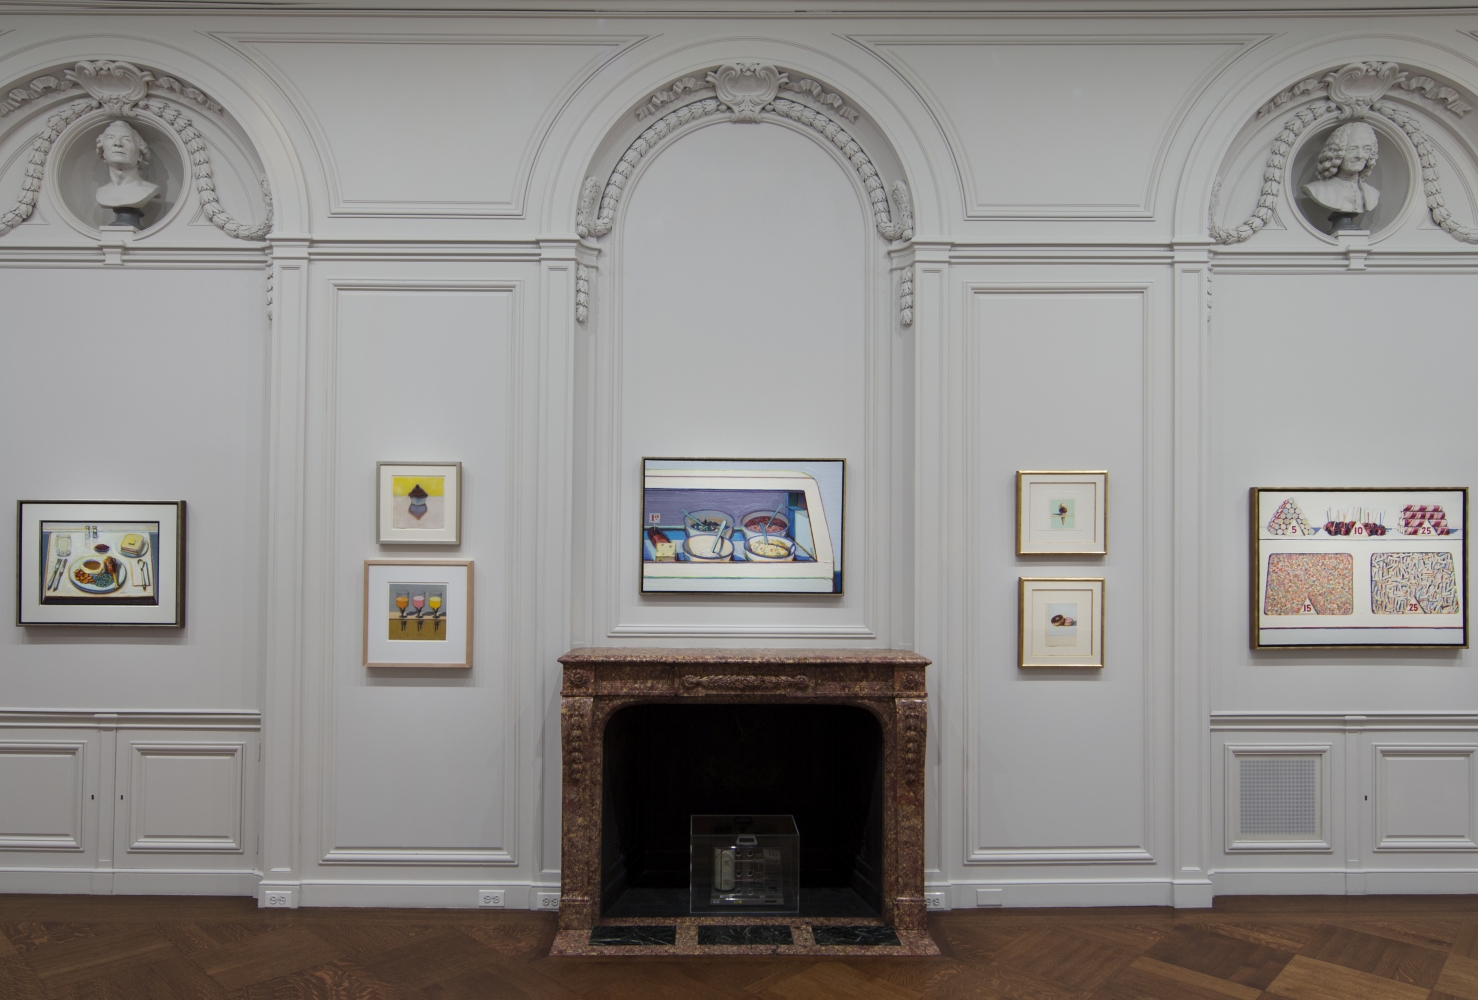 Installation view of Wayne Thiebaud: A Retrospective, October 22 - November 29, 2012.